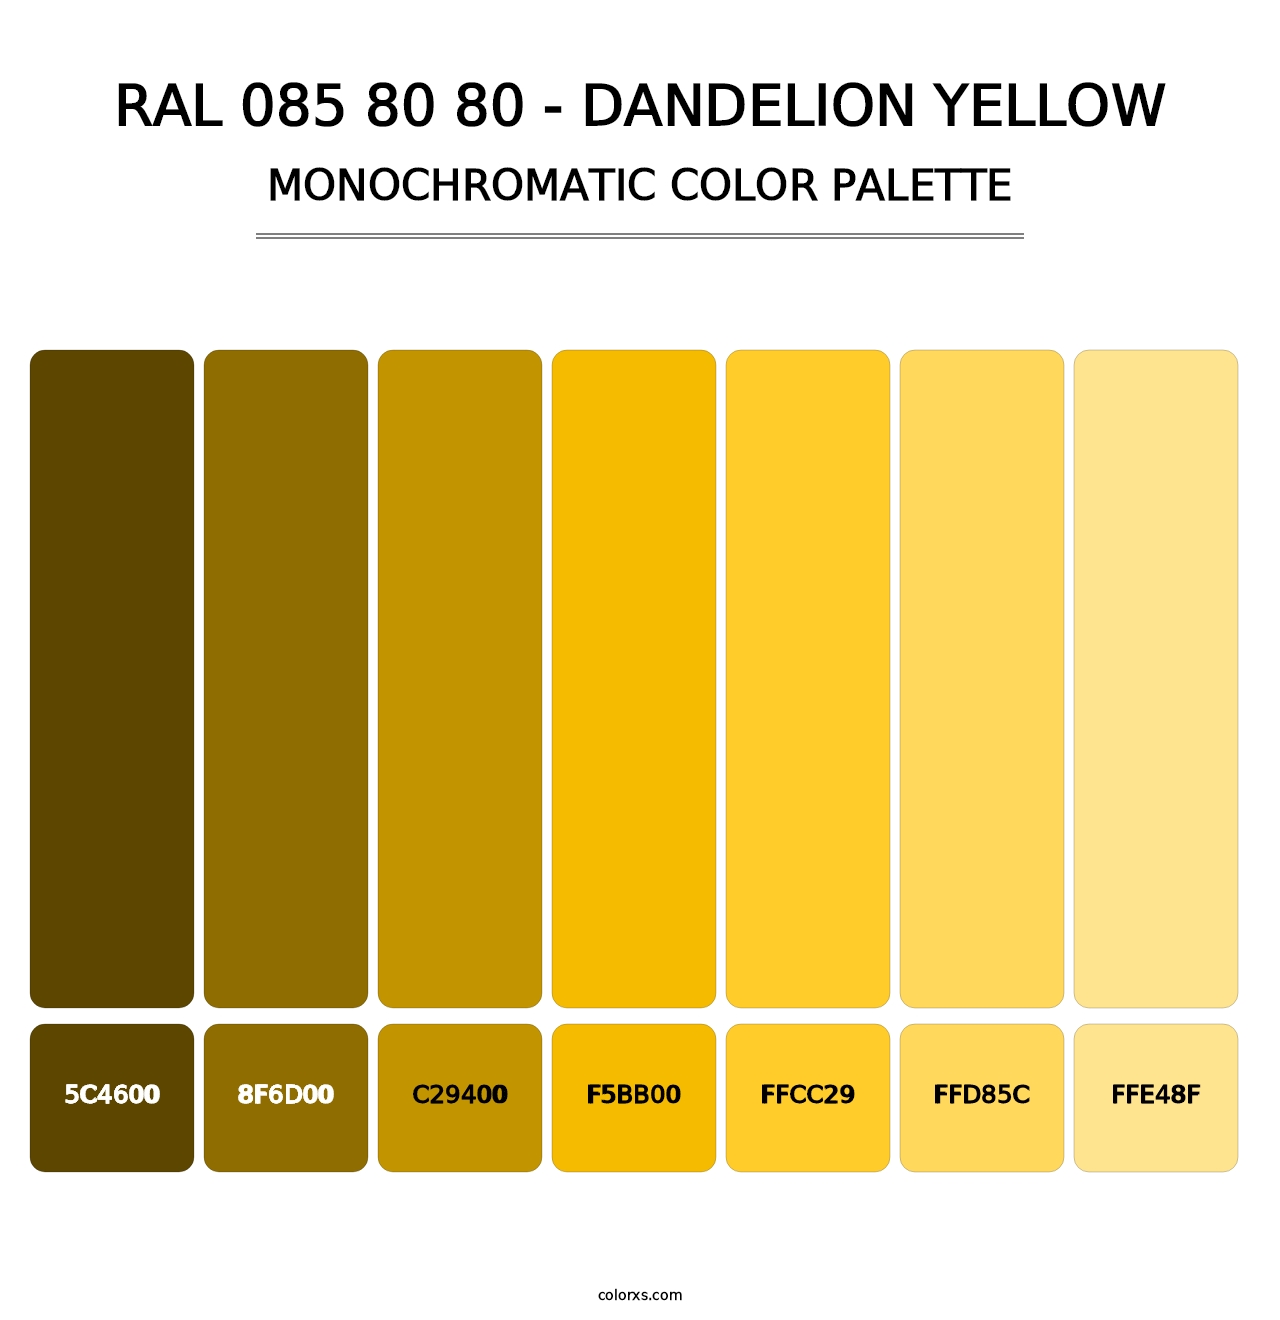 RAL 085 80 80 - Dandelion Yellow - Monochromatic Color Palette